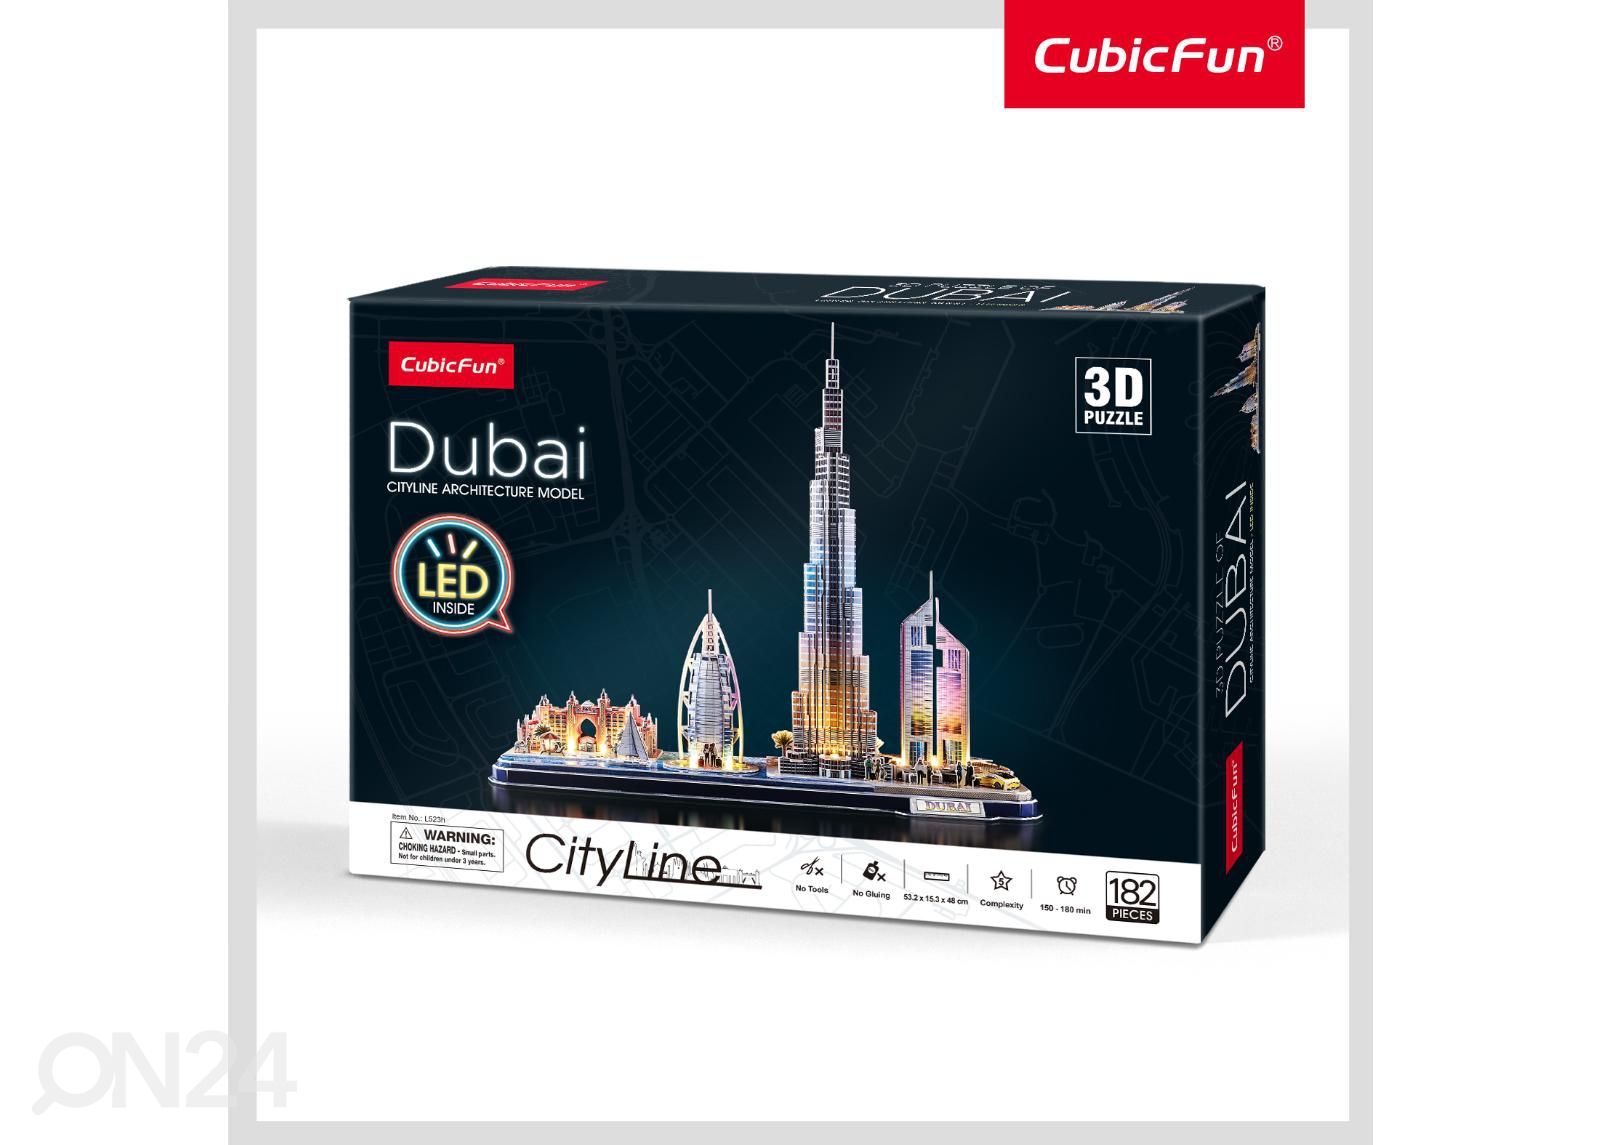 CUBICFUN 3D Palapeli LED-valolla City Line Dubai kuvasuurennos